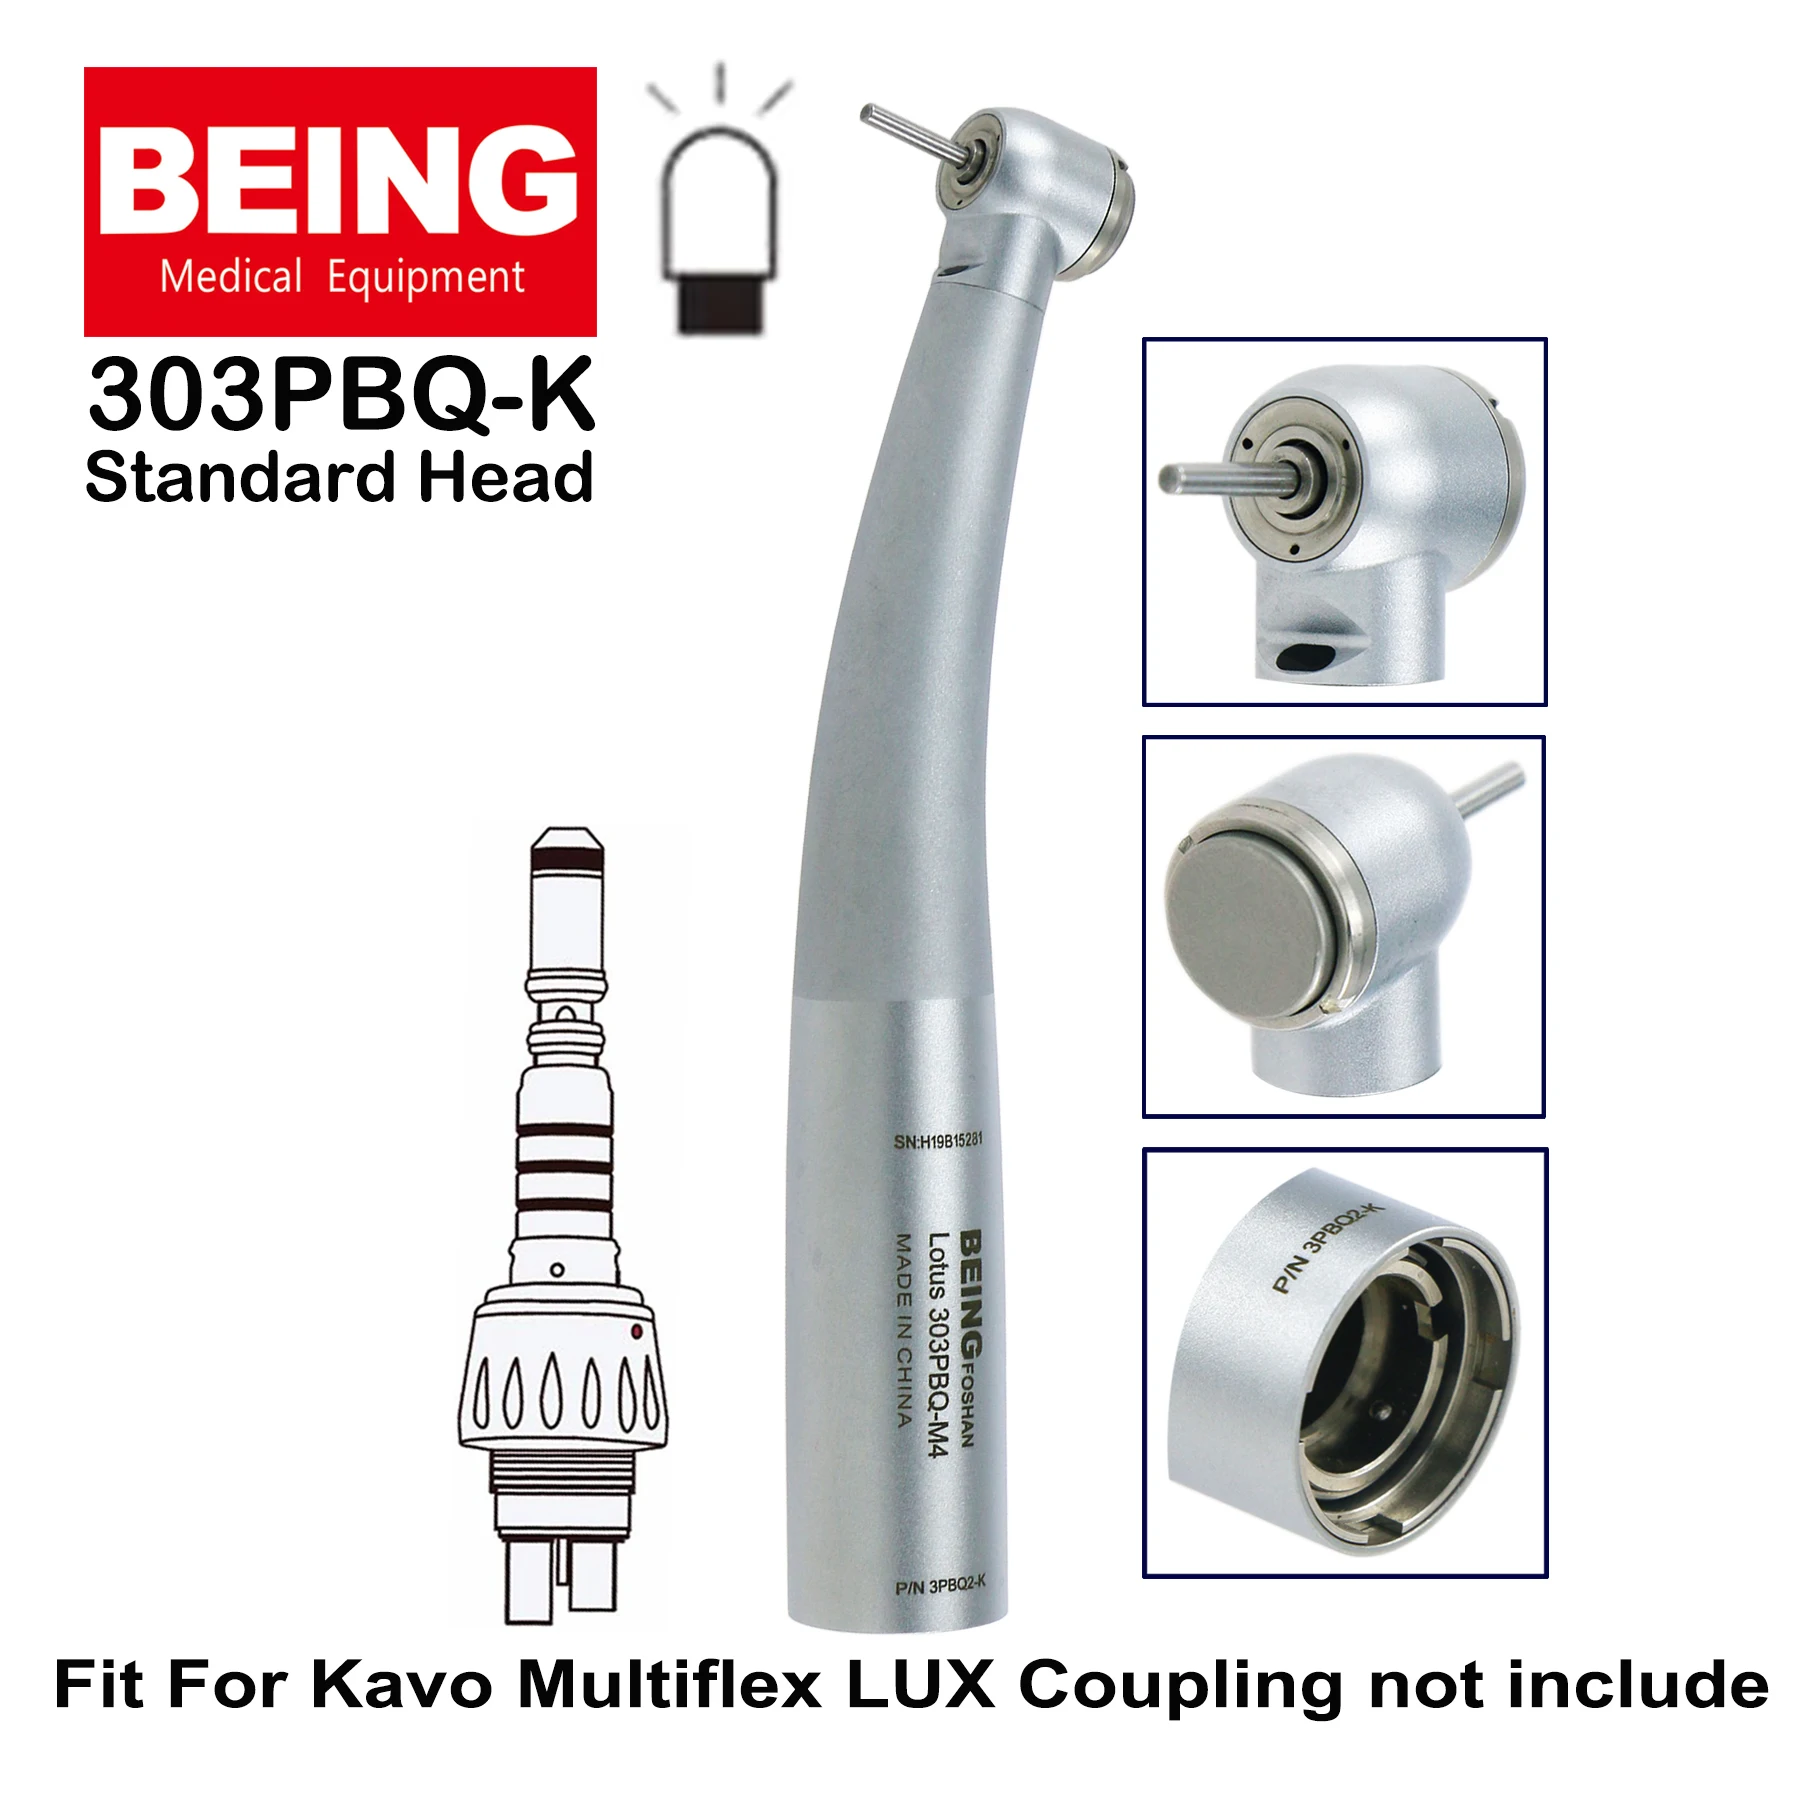 BEING Dental LED Fiber Optic High Speed Air Turbine Standard Head Turbine Handpiece 303PBQ-K For KAVO MULTIflex Coupling 6Holes